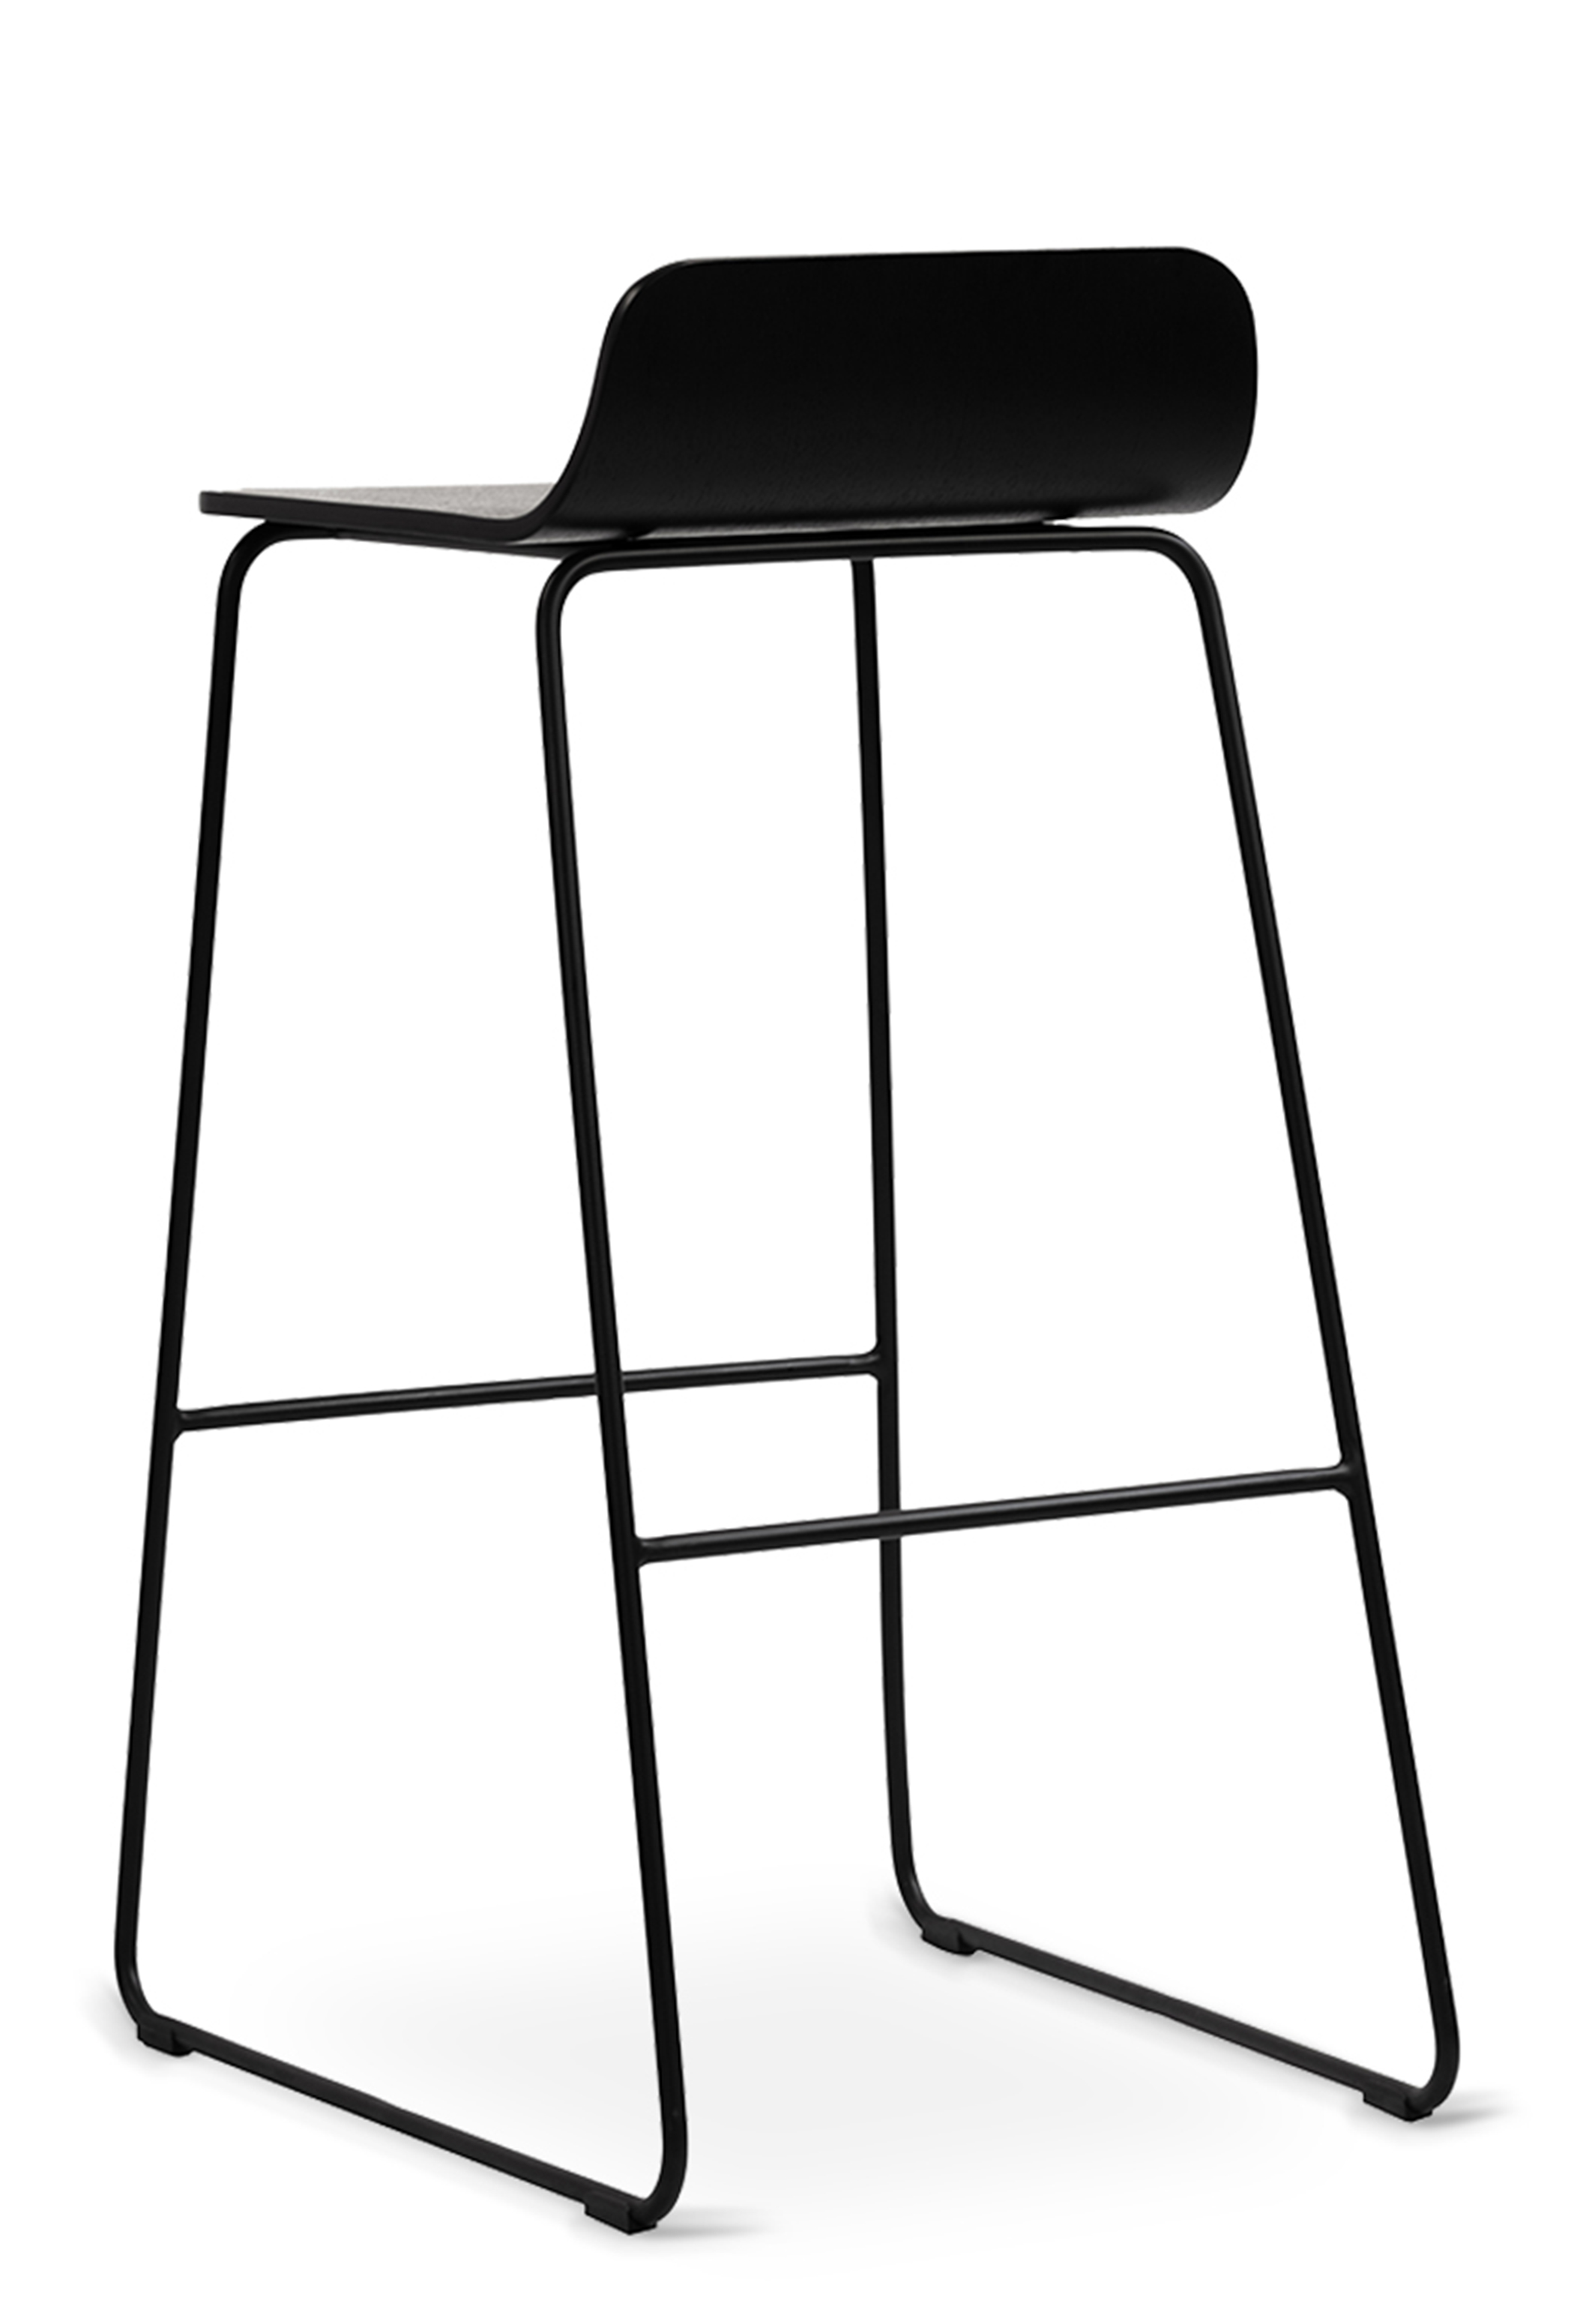 WS - Lolli high stool - Black ash (Back angle)